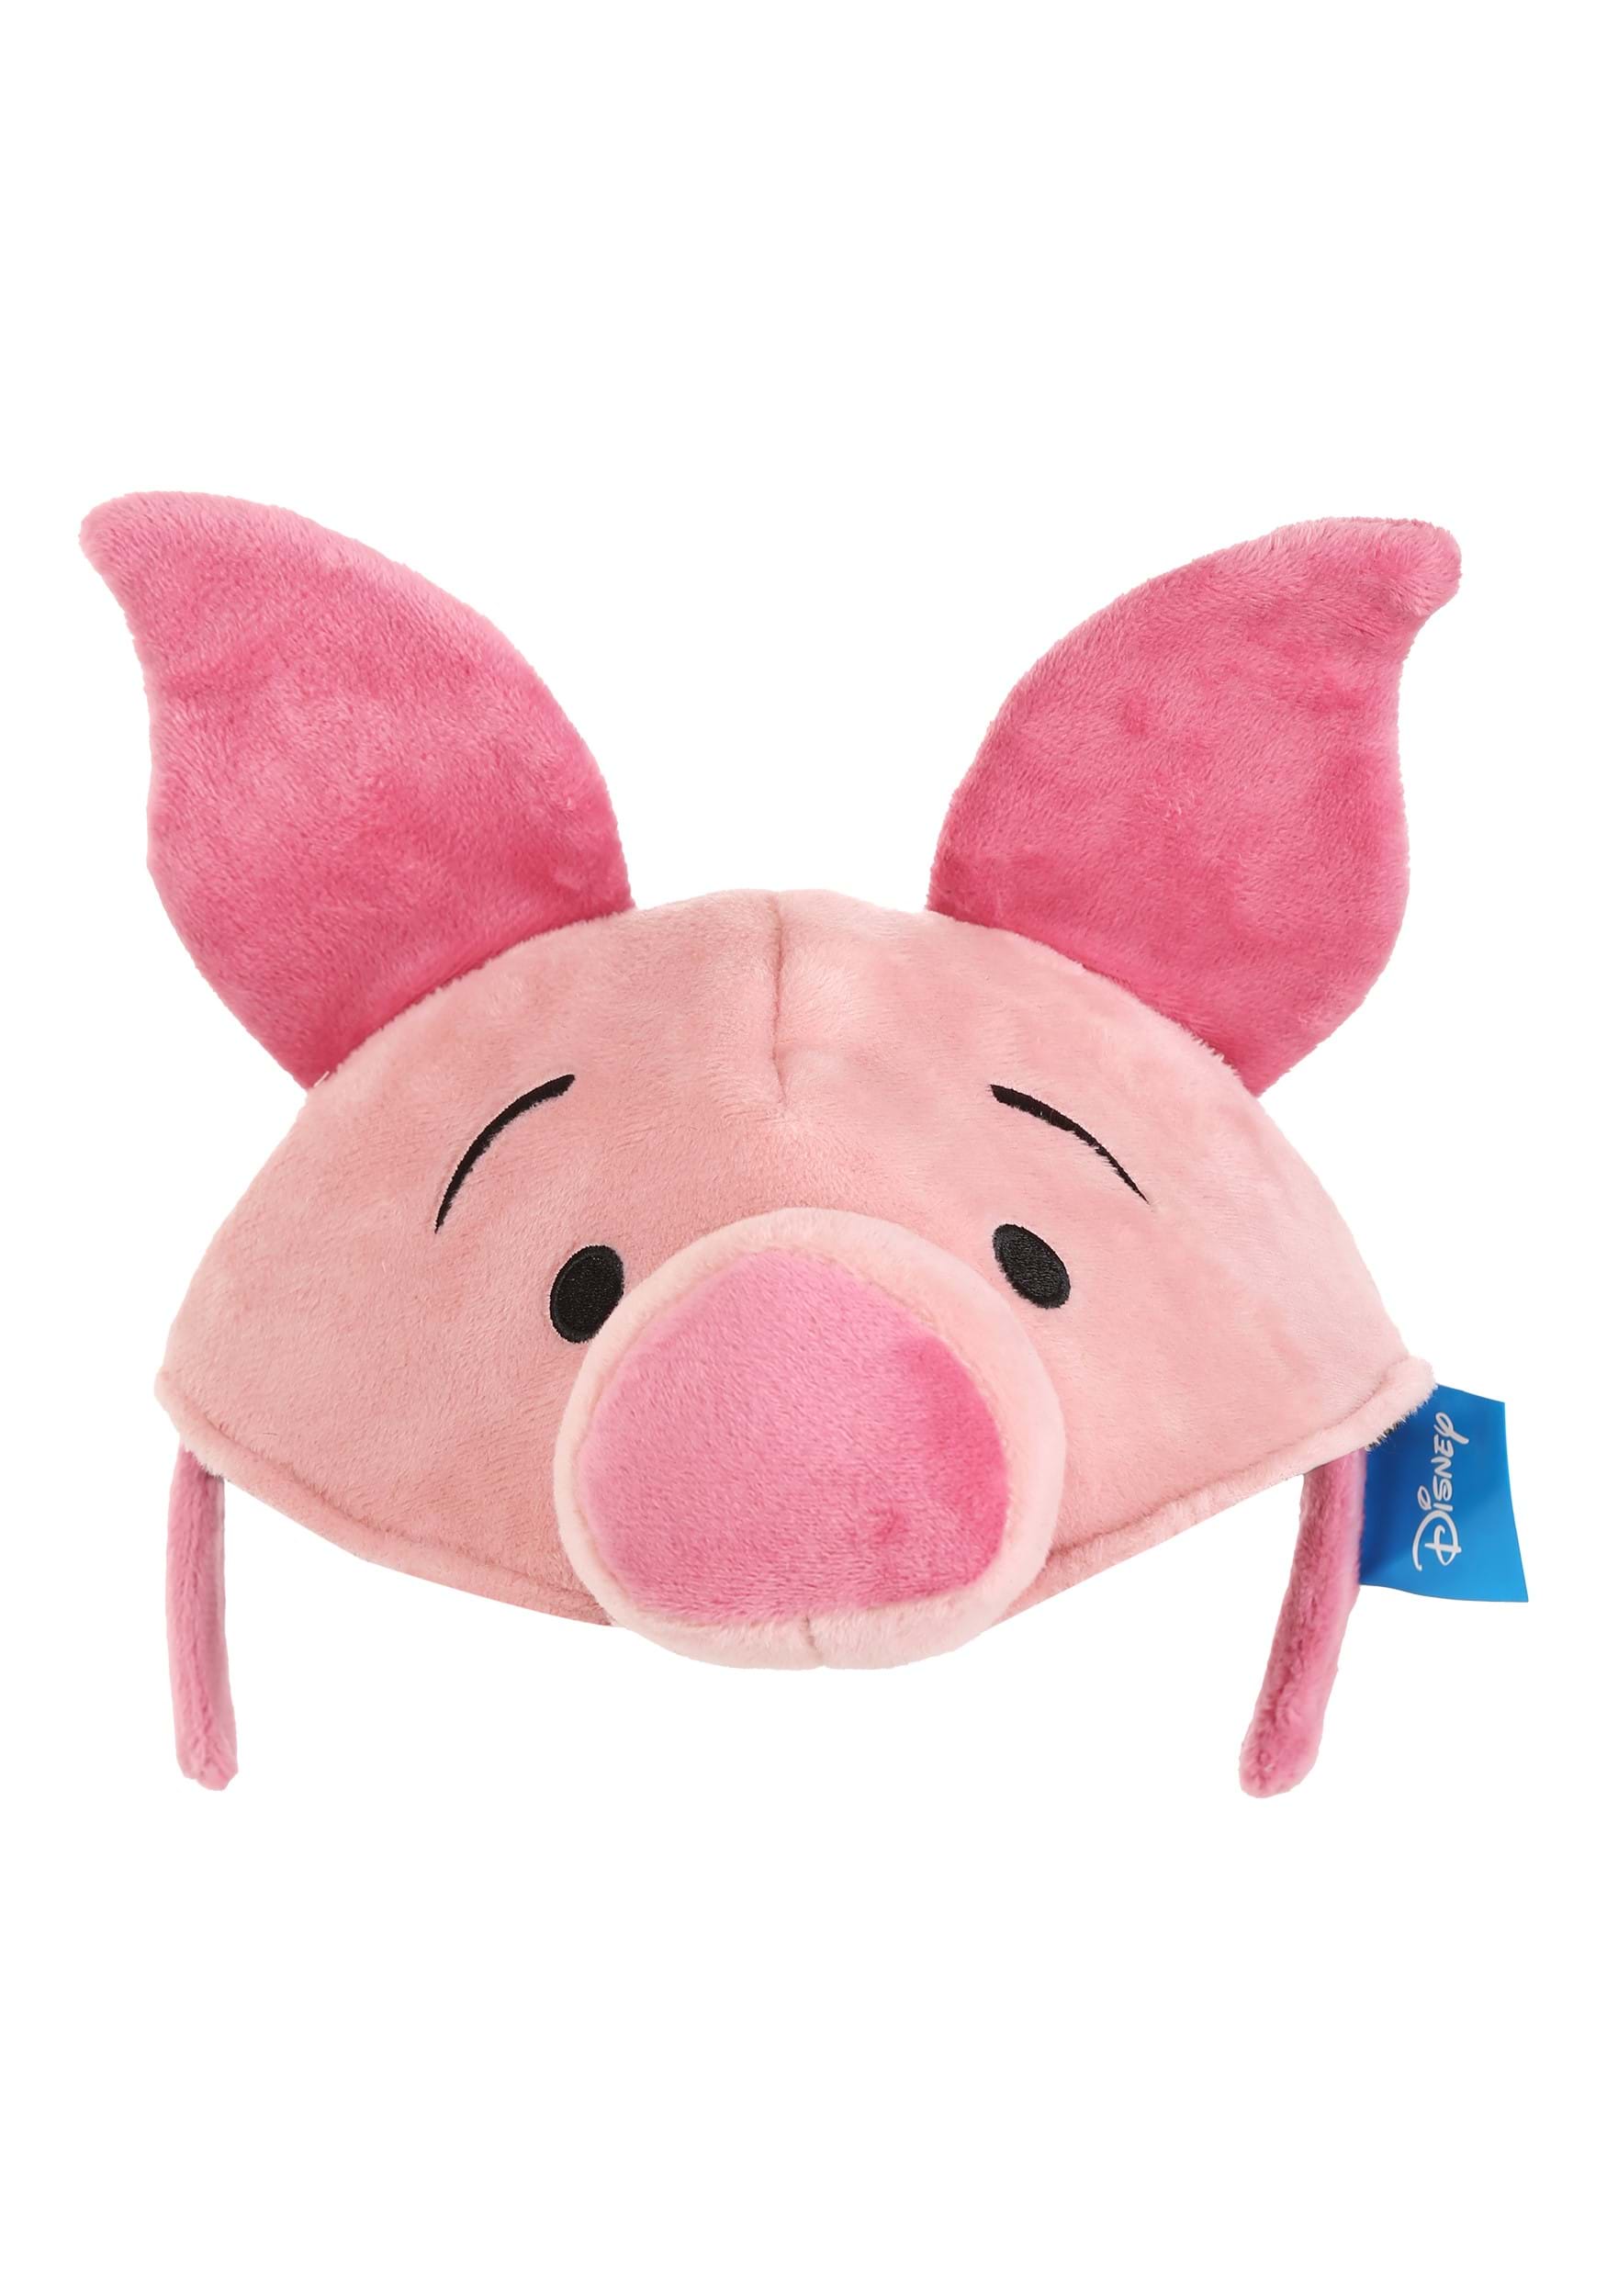 Plush Costume Headband Of Piglet From Winnie The Pooh